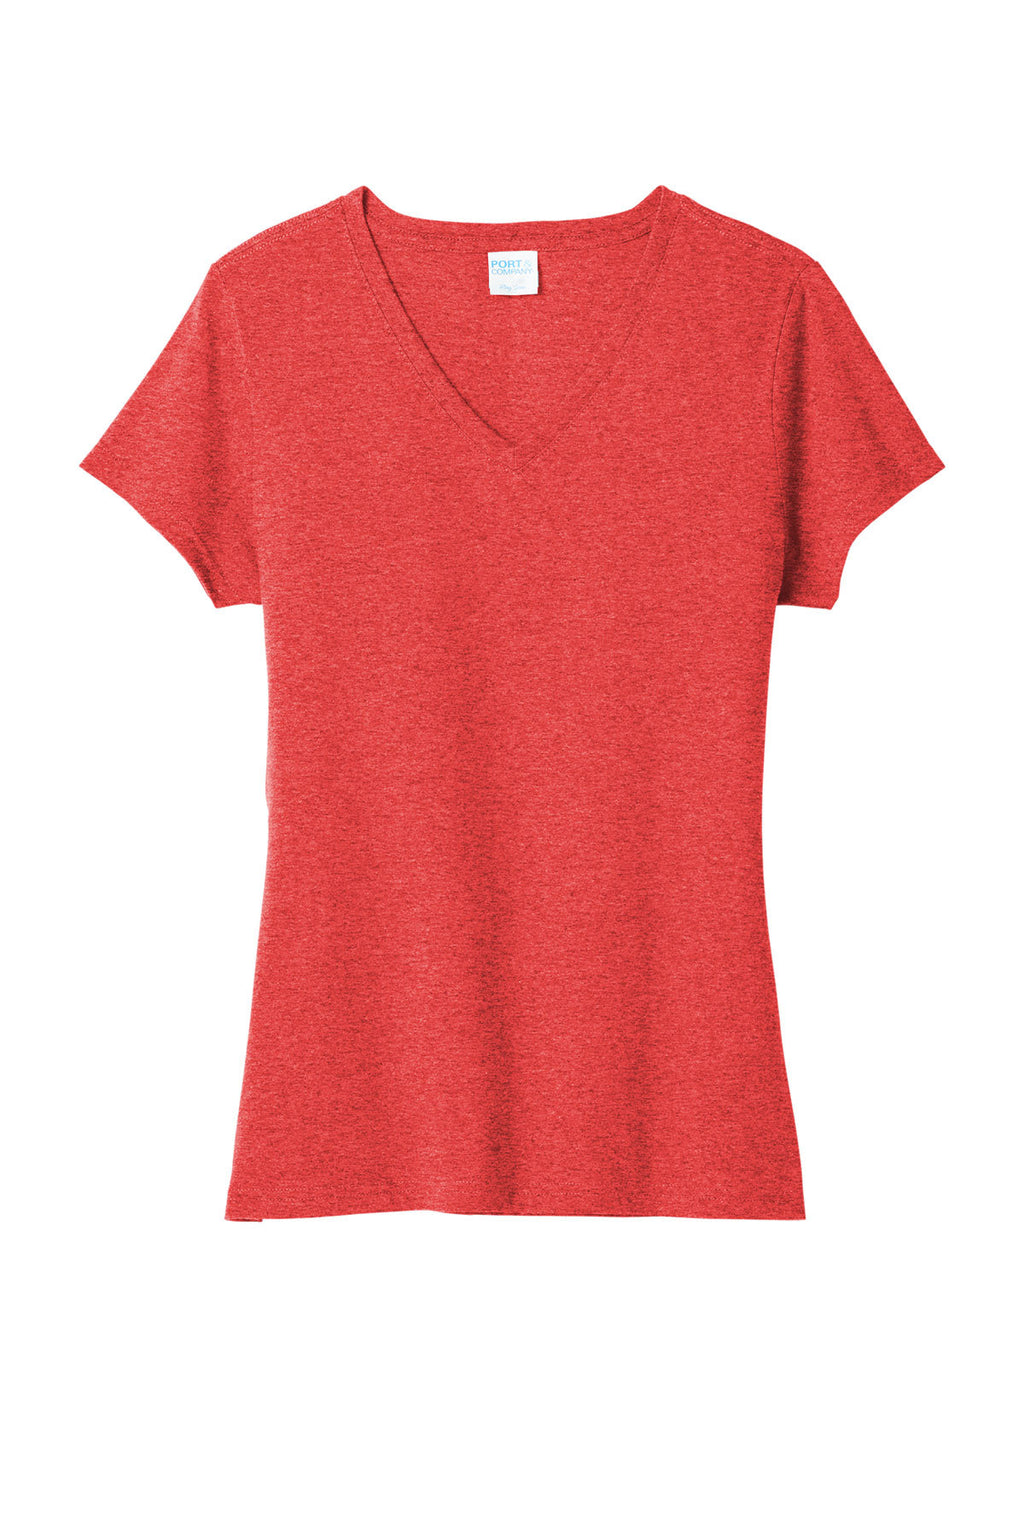 Port & Company Ladies V-Neck S/S Shirt Bright Red Heather